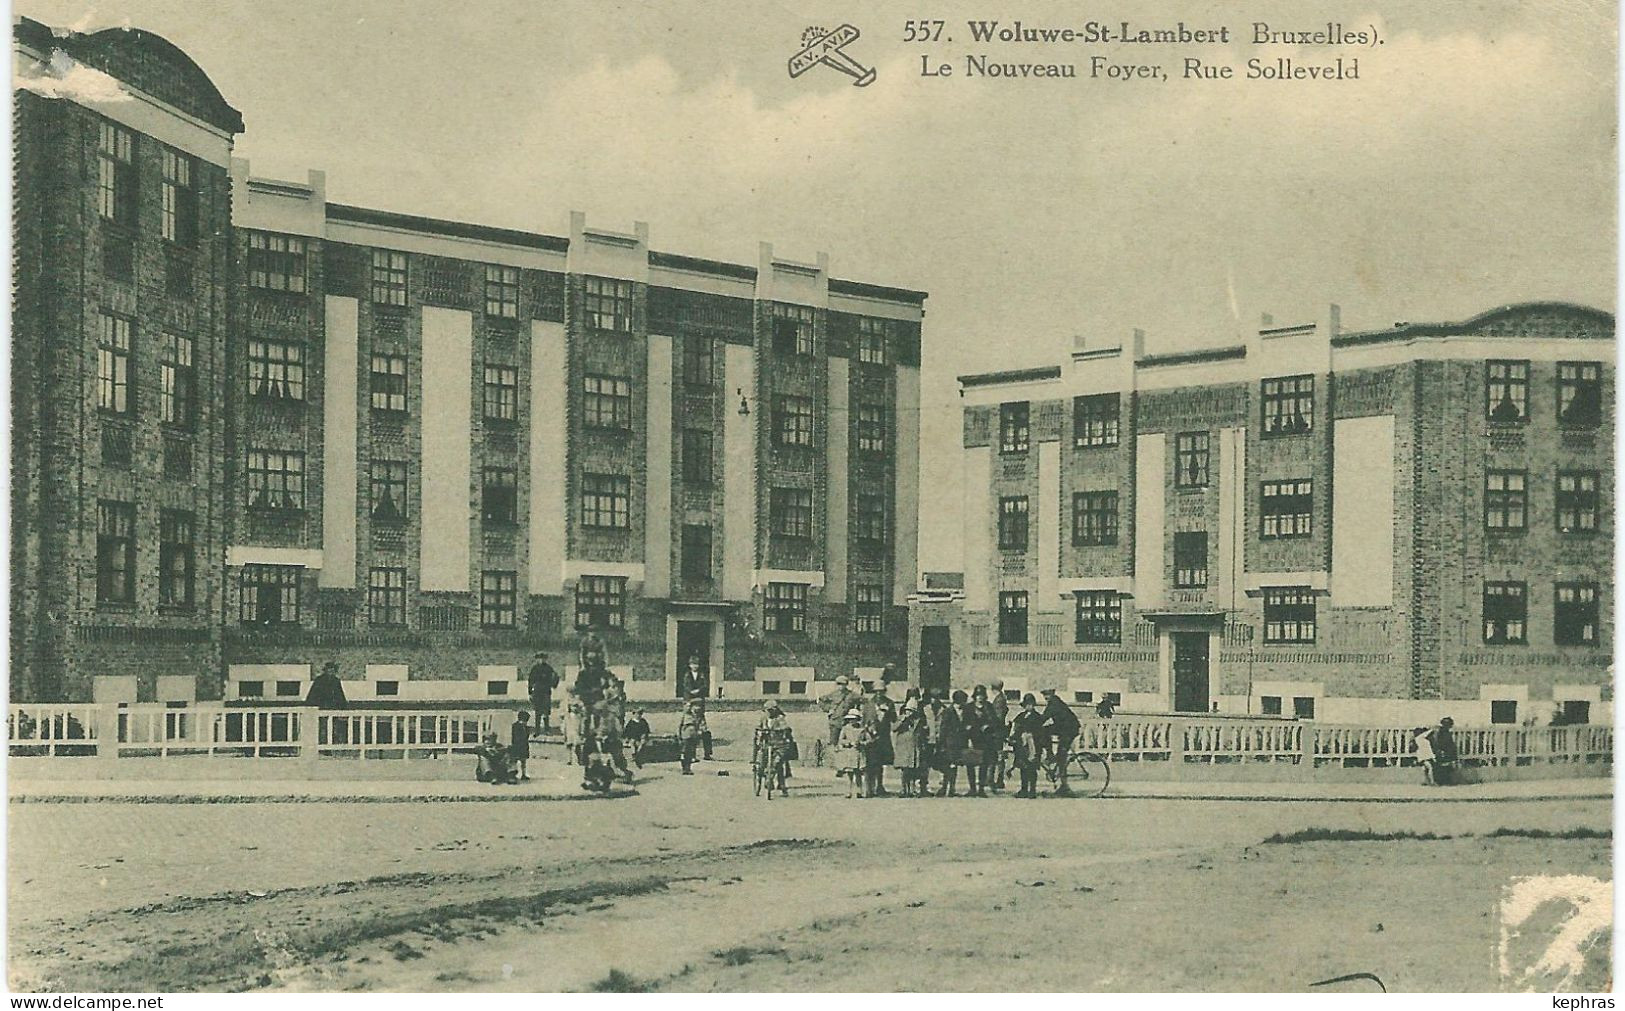 557. WOLUWE-ST-LAMBERT : Le Nouveau Foyer - Rue Solleveld Cachet De La Poste 1930 - Woluwe-St-Lambert - St-Lambrechts-Woluwe